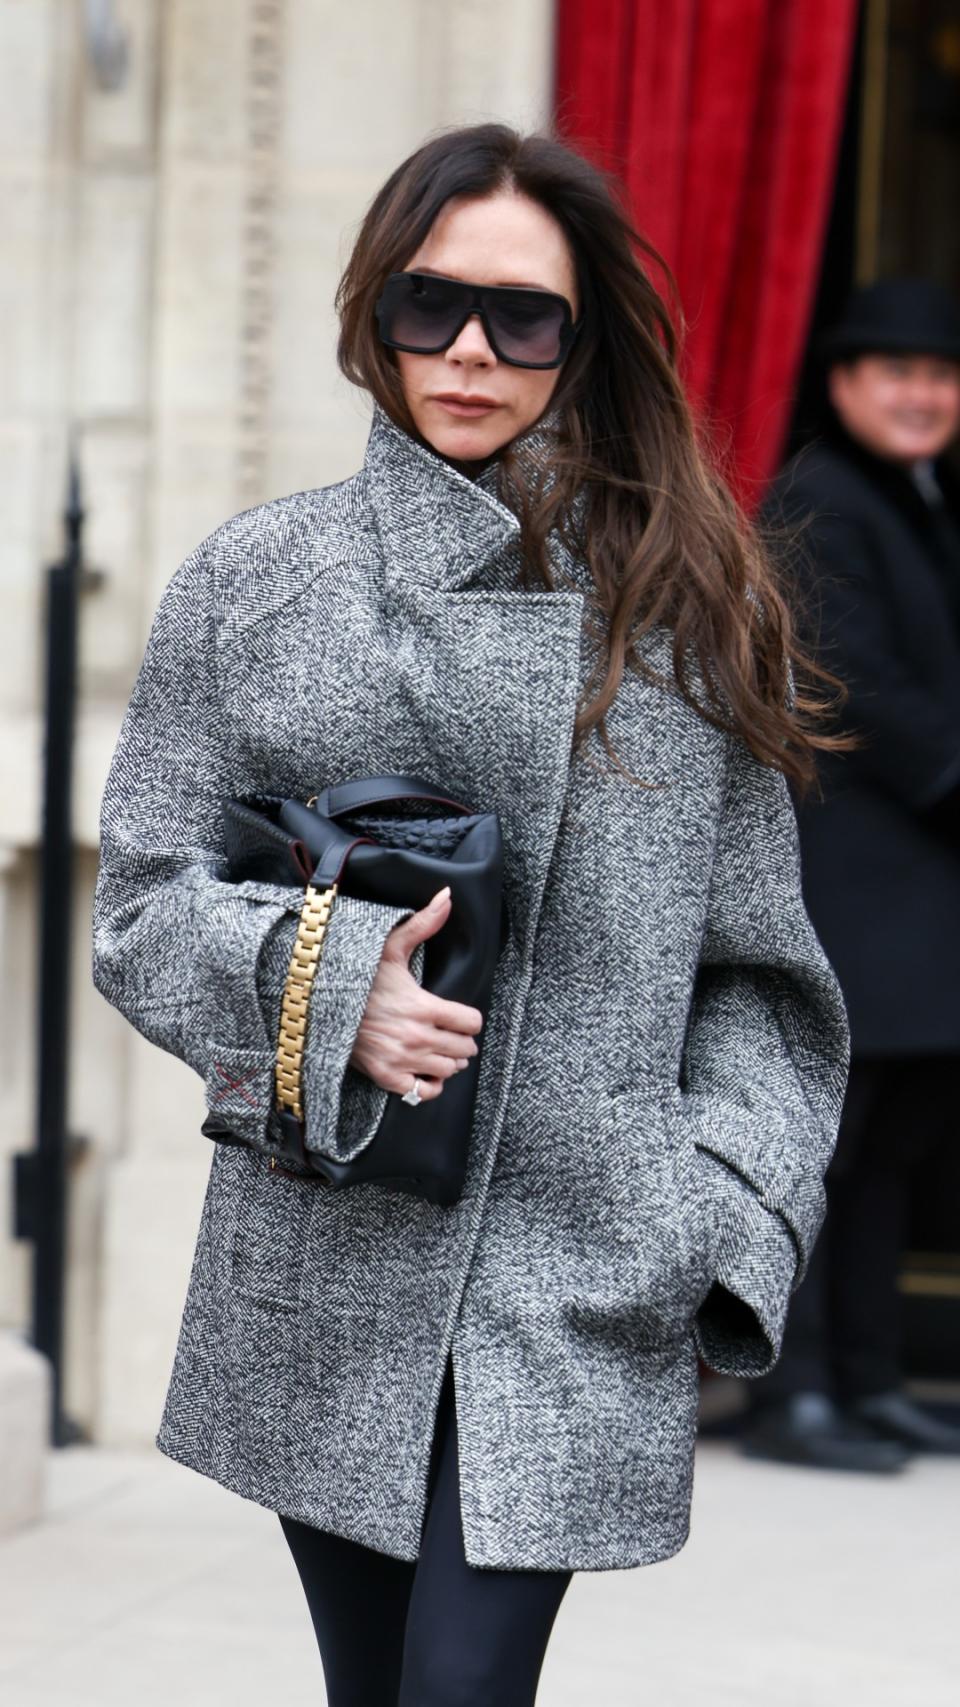 Victoria Beckham wearing a grey coat and huge sunglasses